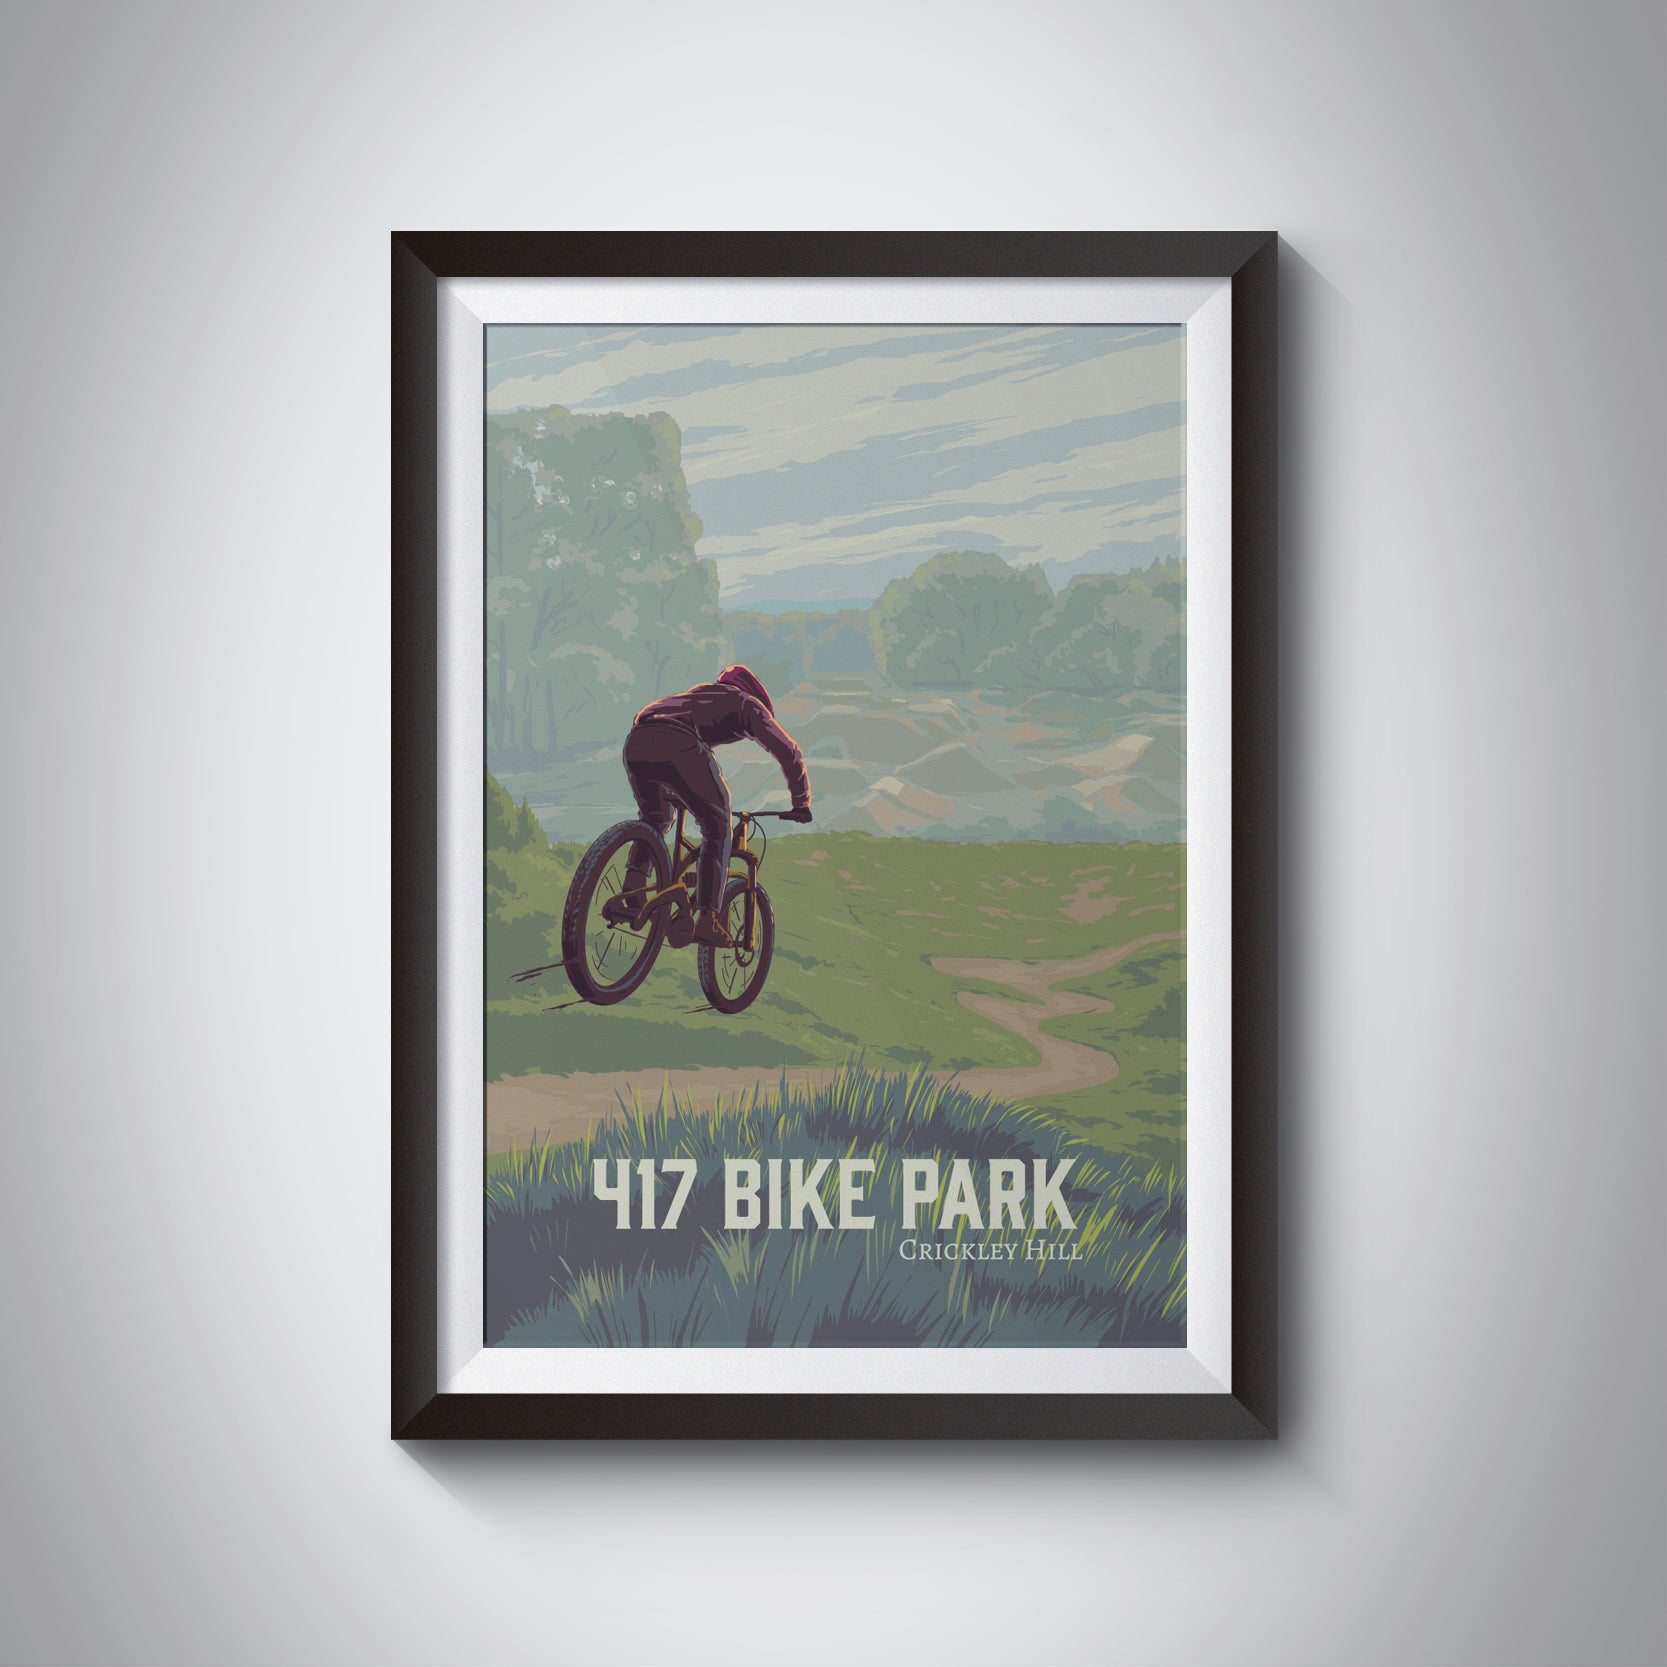 417 Bike Park Mountain Biking Travel Poster